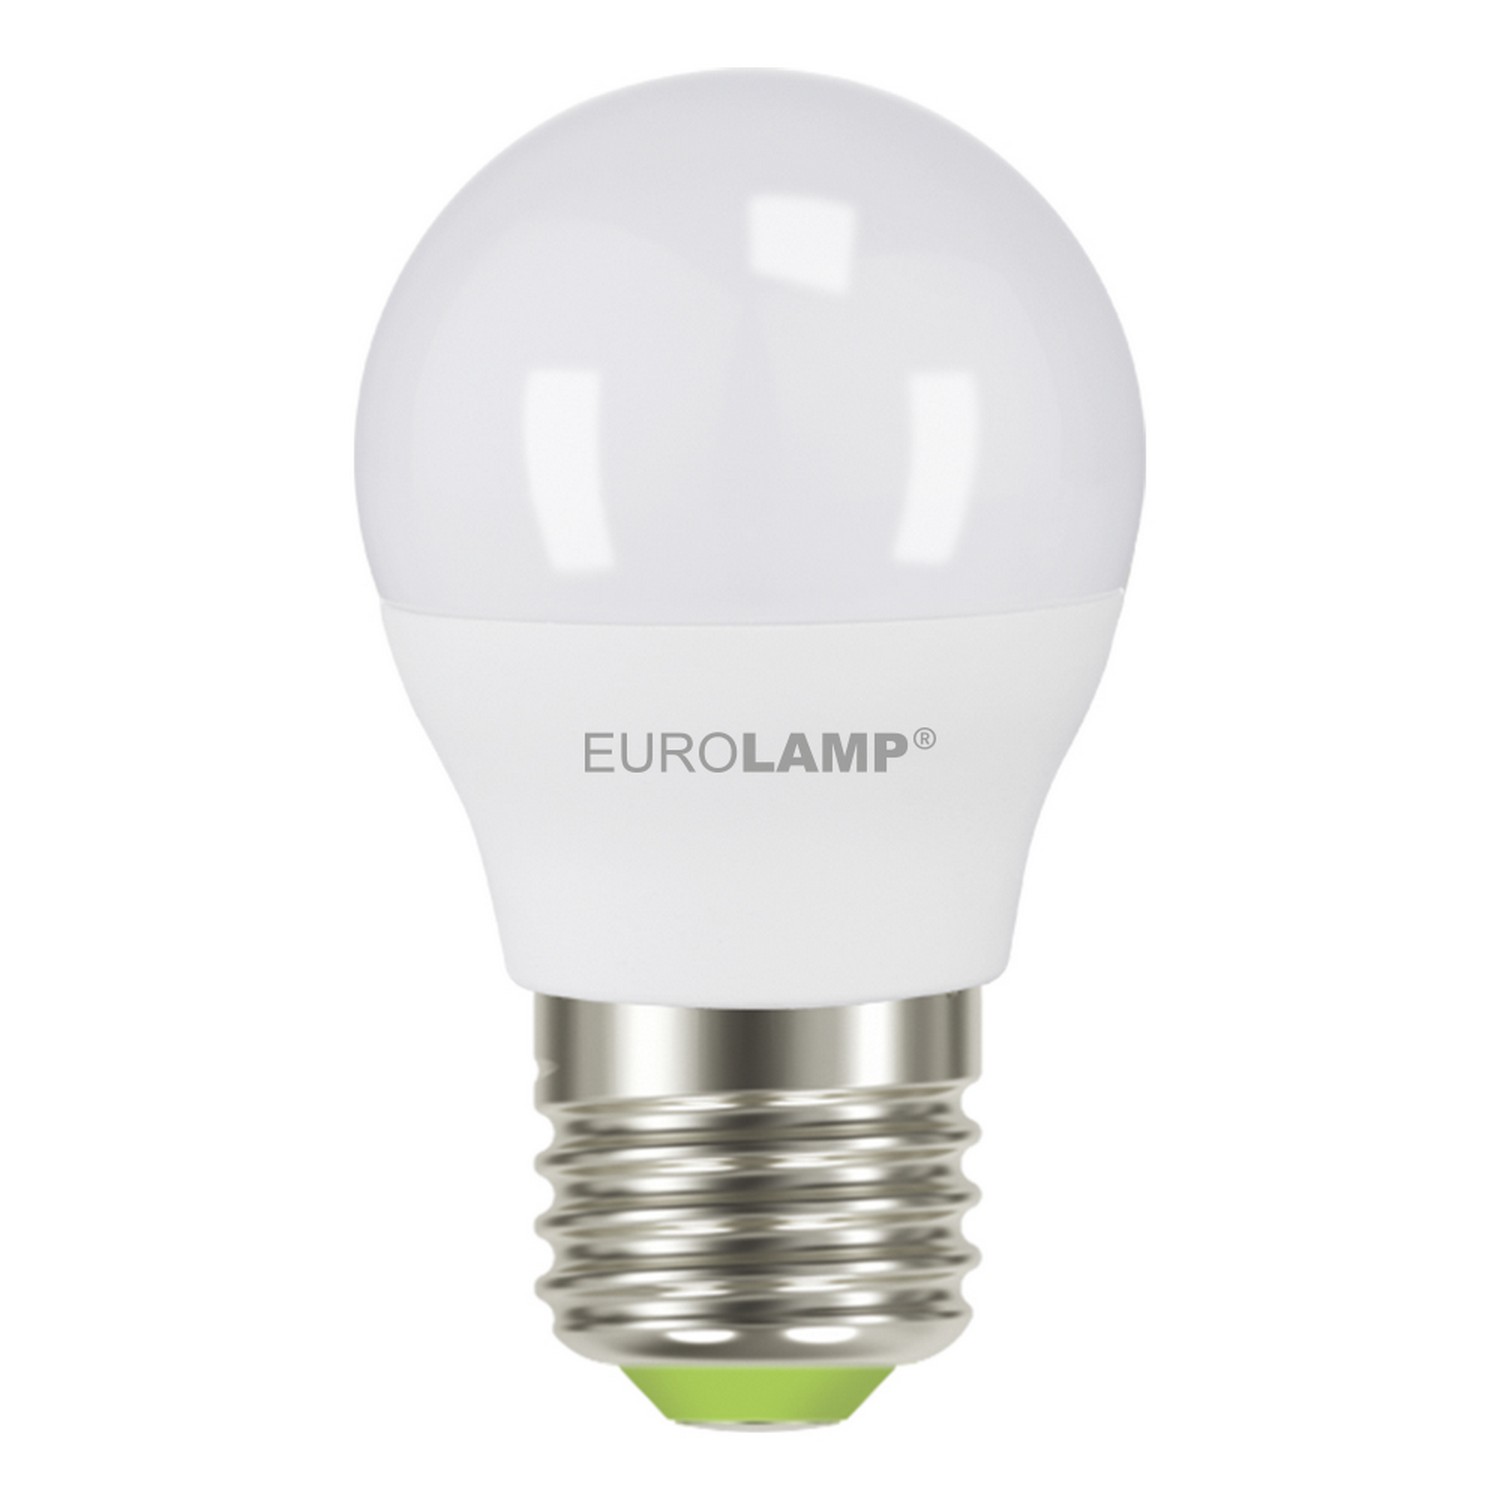 Лампа Eurolamp LED EKO G45 7W E27 3000K акция "1+1" цена 0 грн - фотография 2